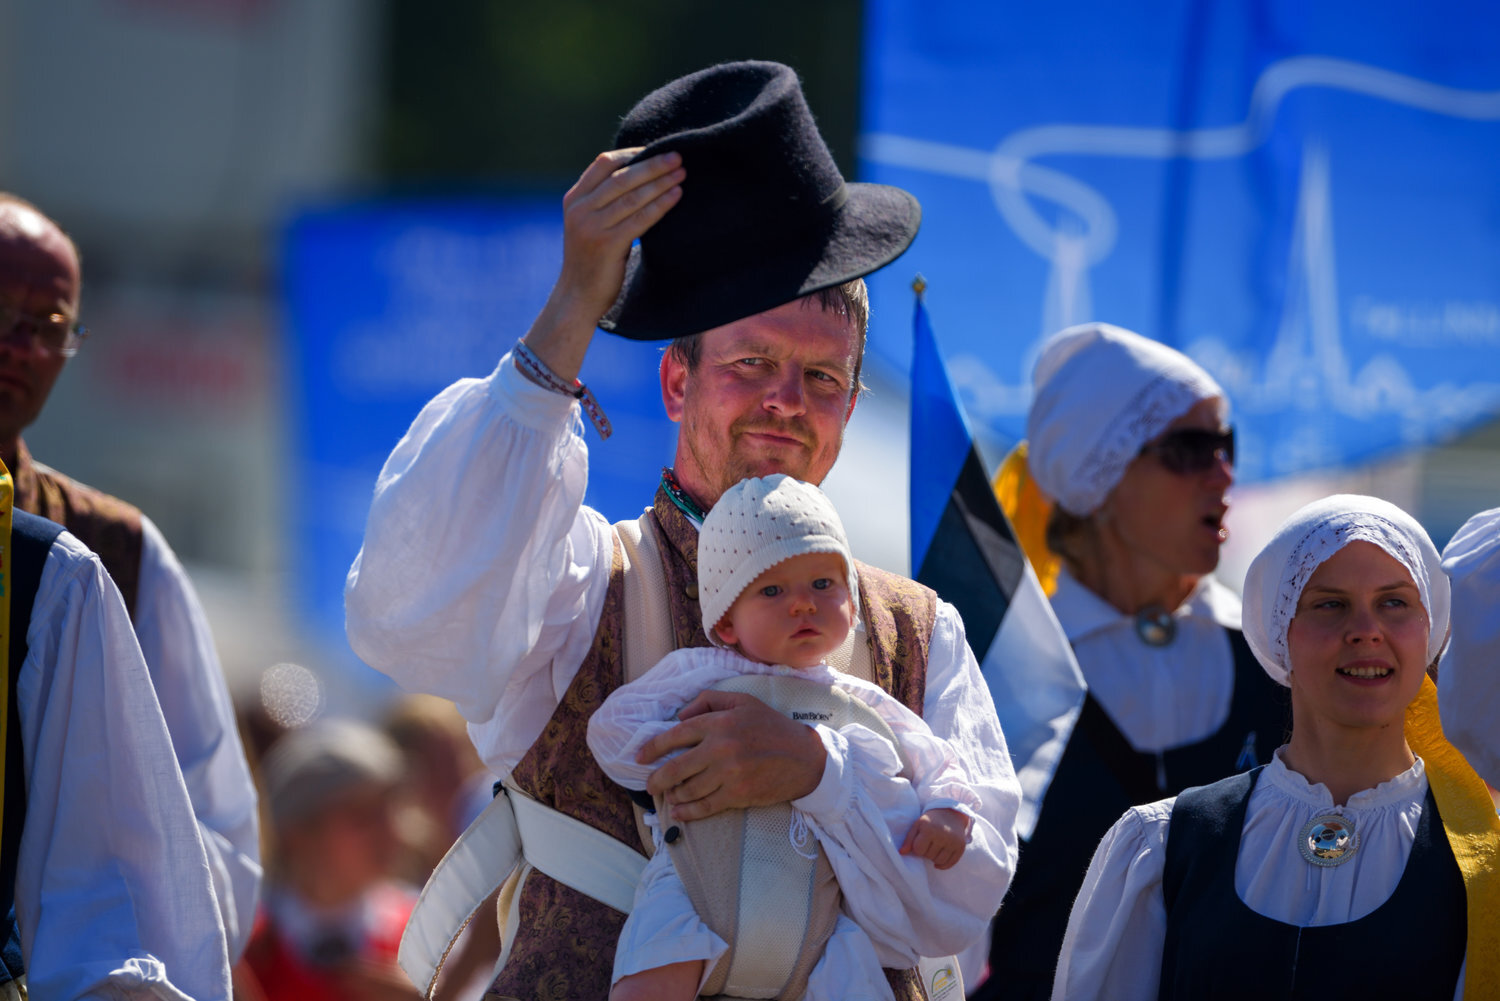  Tallinn, EstoniaParade through city and opening ceremony 